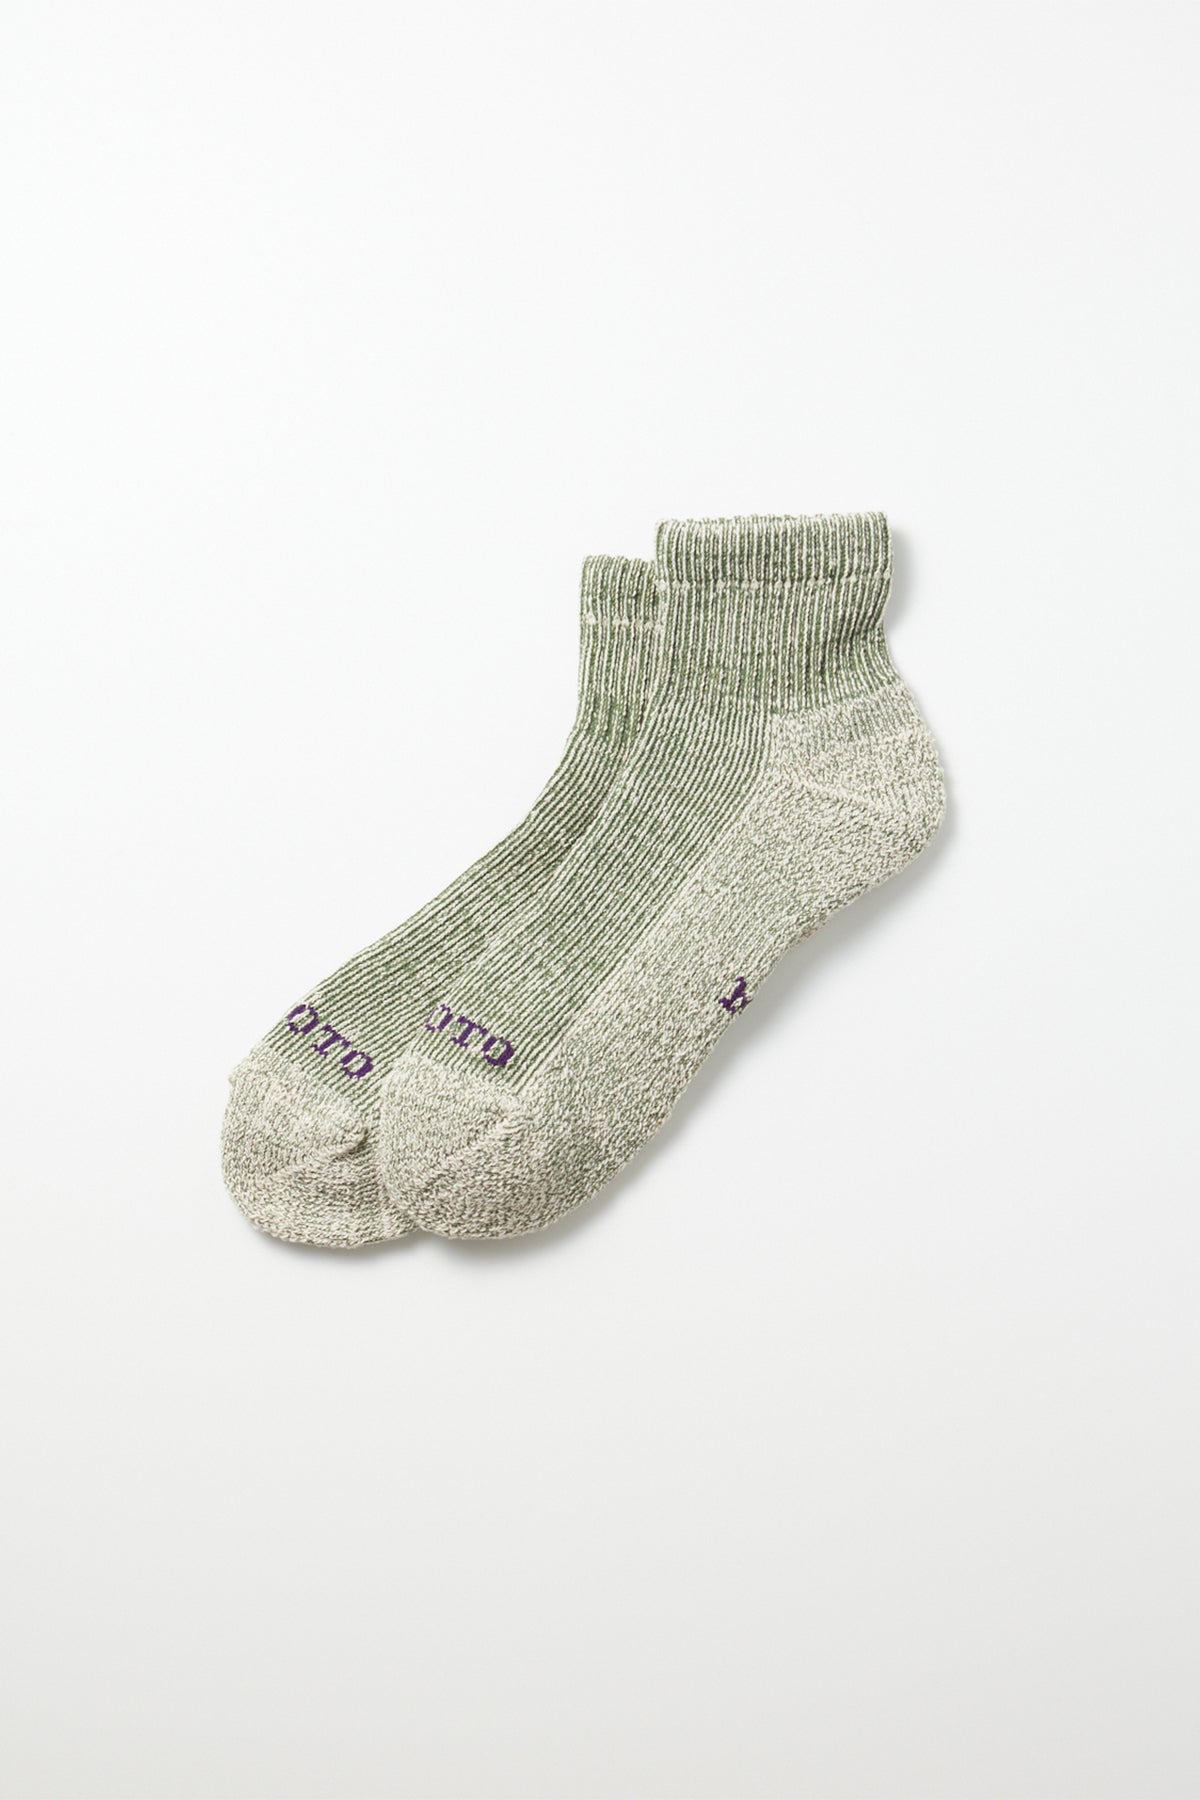 Hemp Socks, Organic Hemp